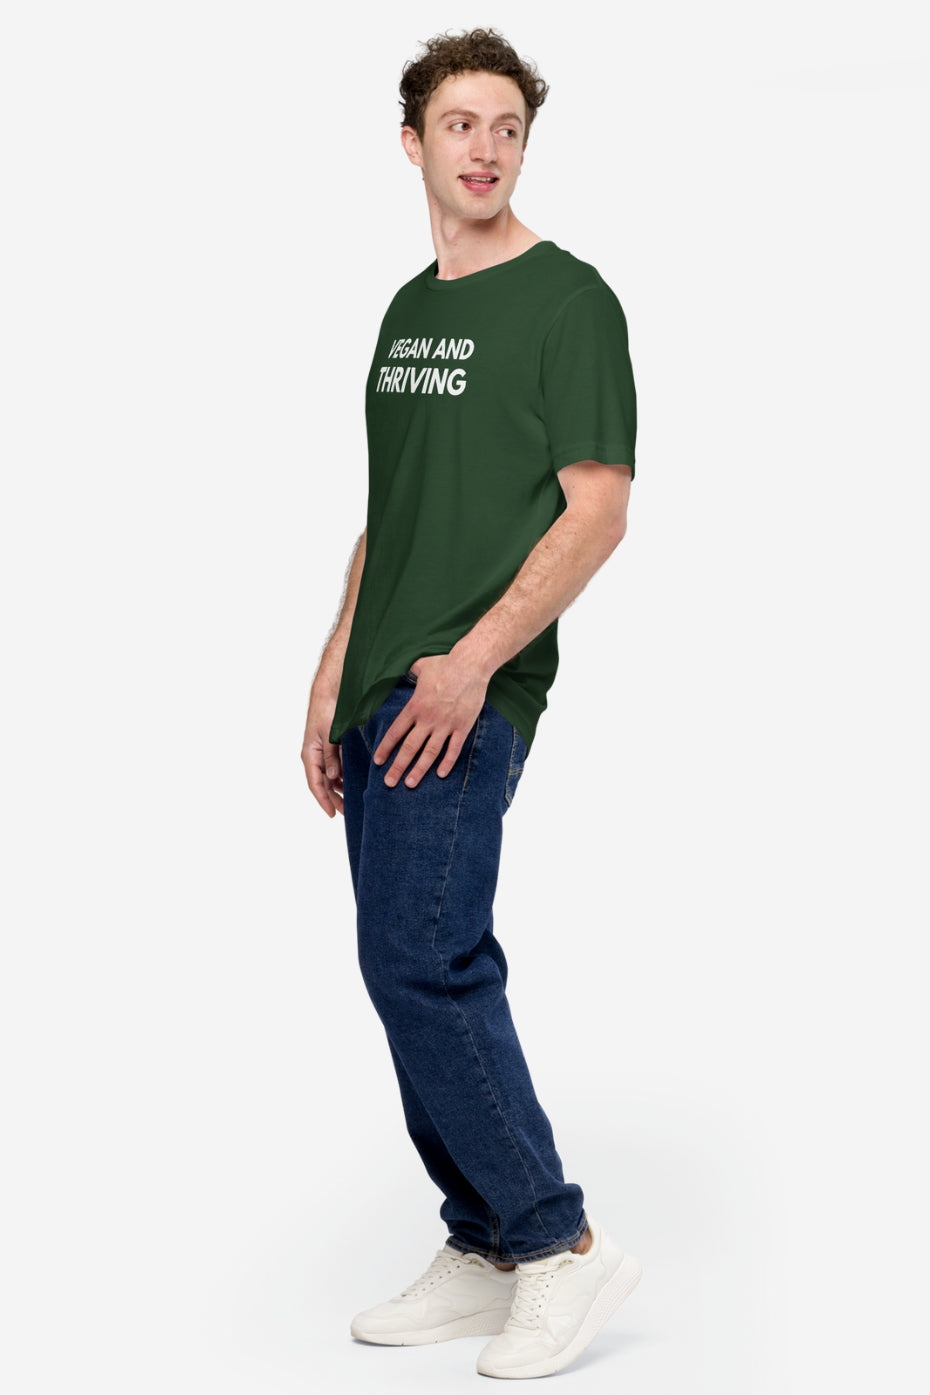 Vegan And Thriving Unisex Vegan T-shirt